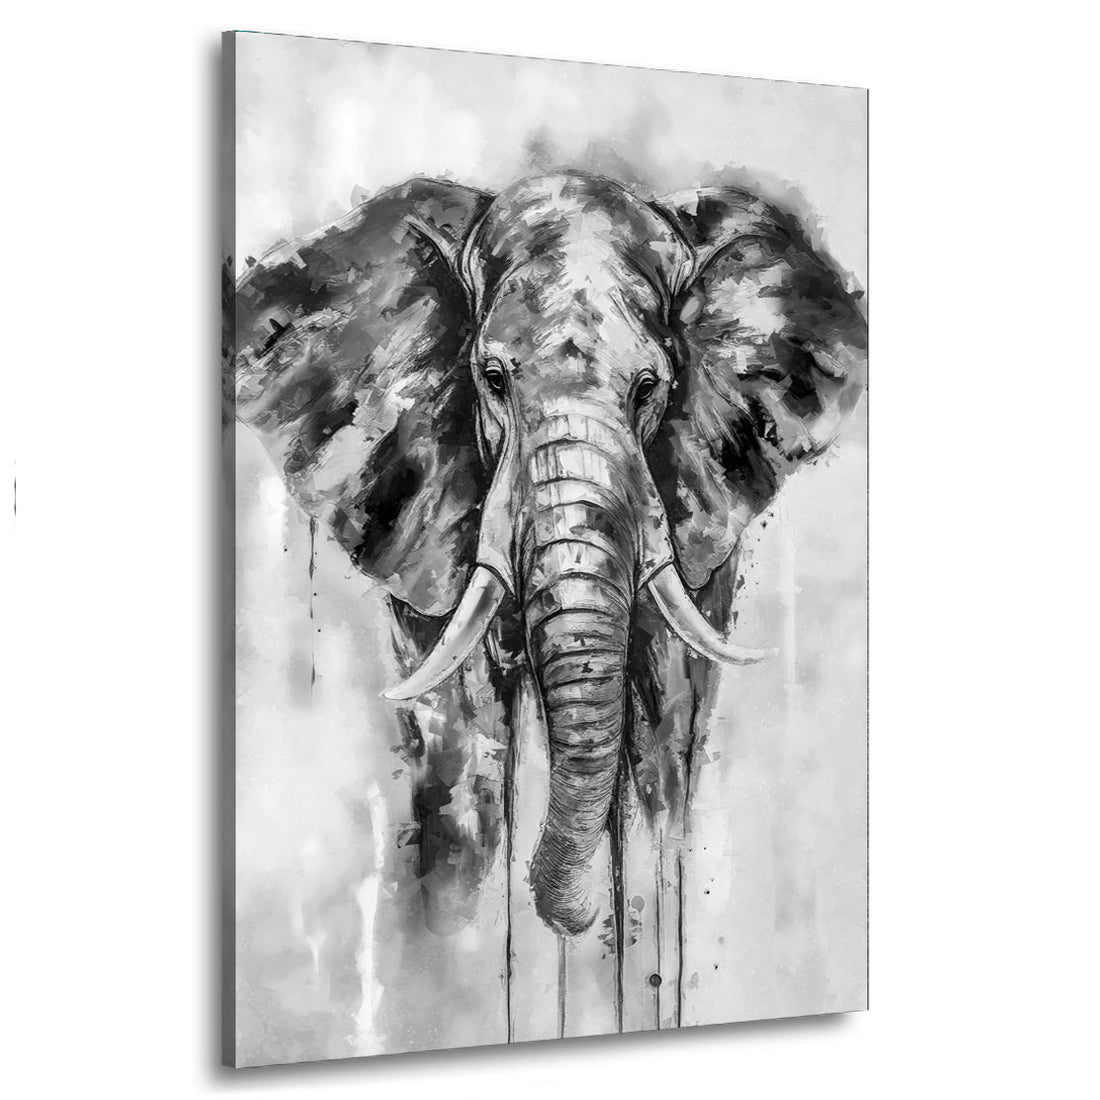 Wandbild Elefant abstrakt schwarz weiß